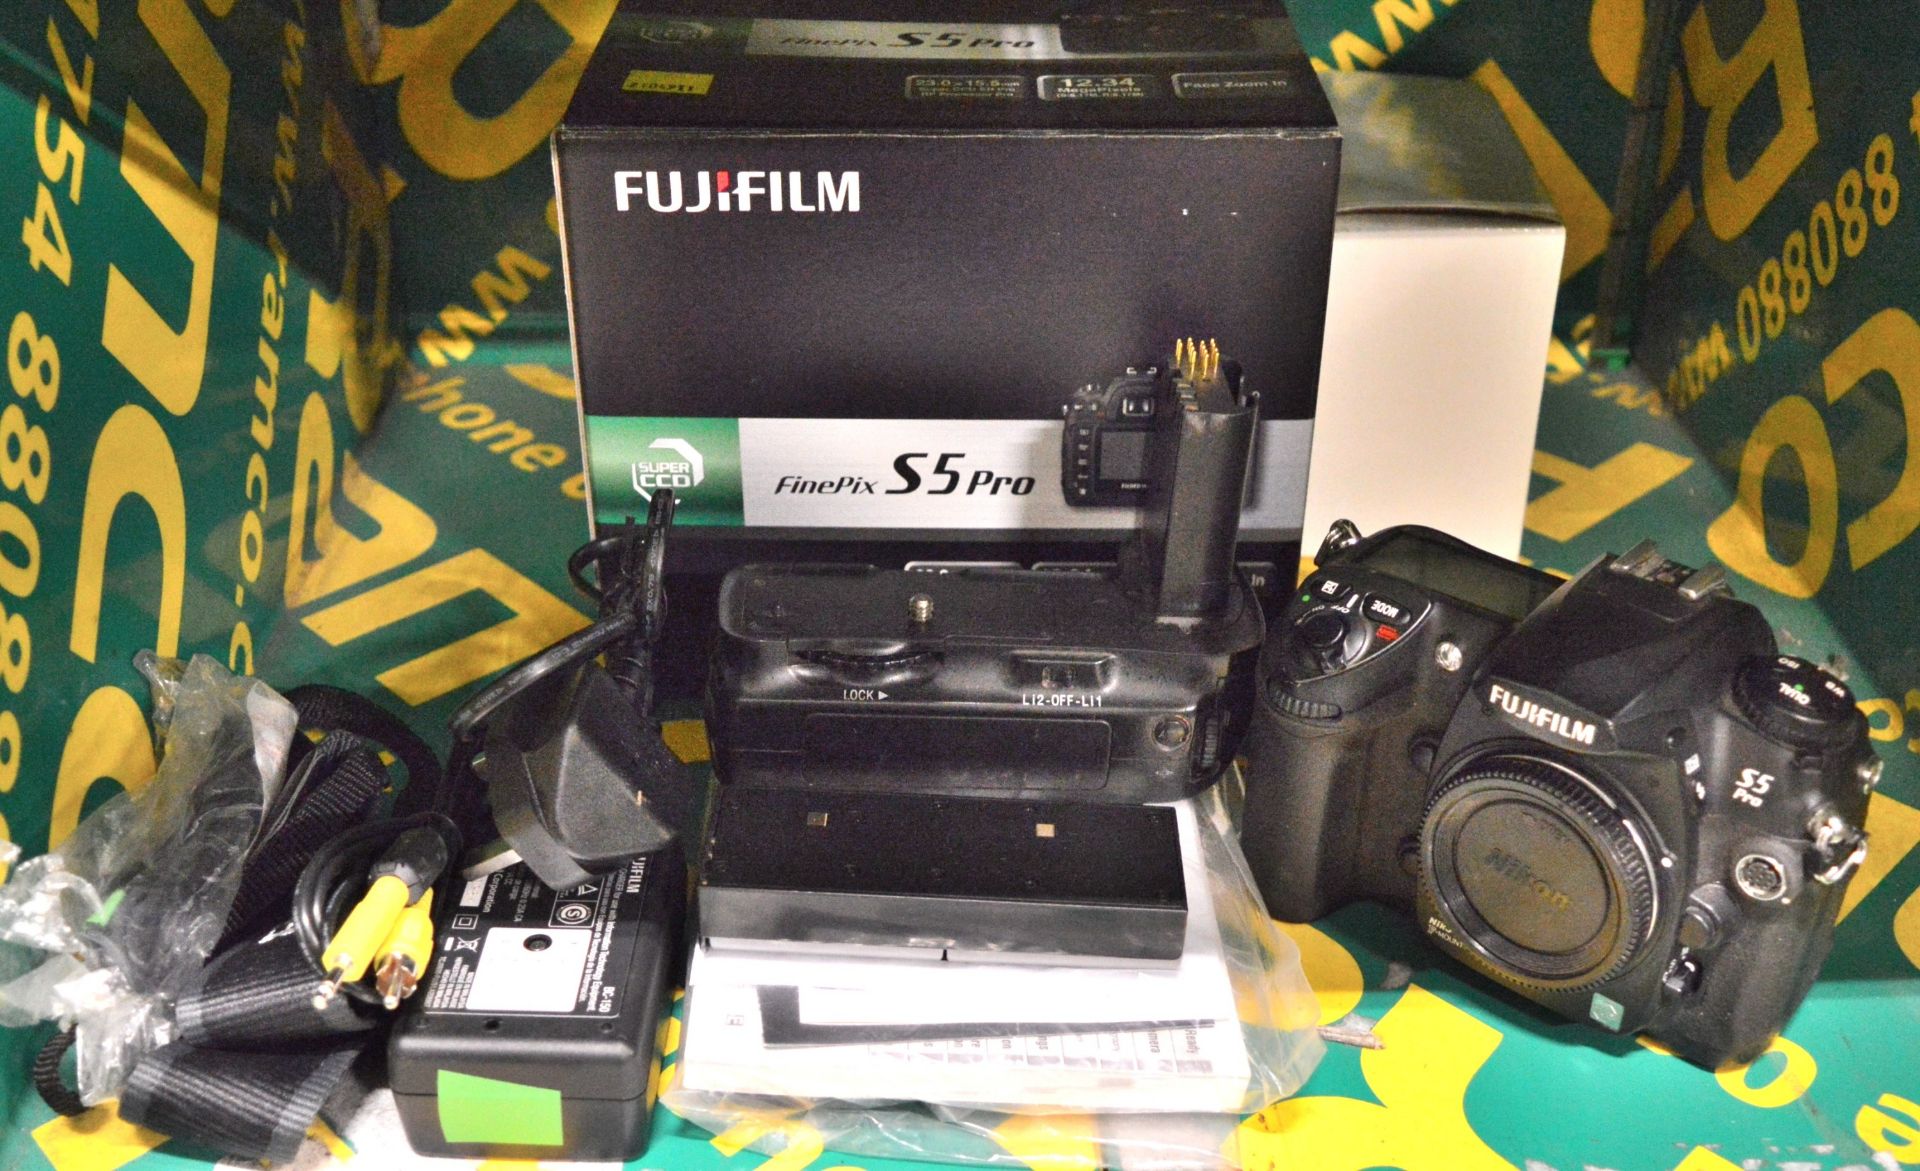 Fujifilm FinePix S5 Pro Digital Camera.